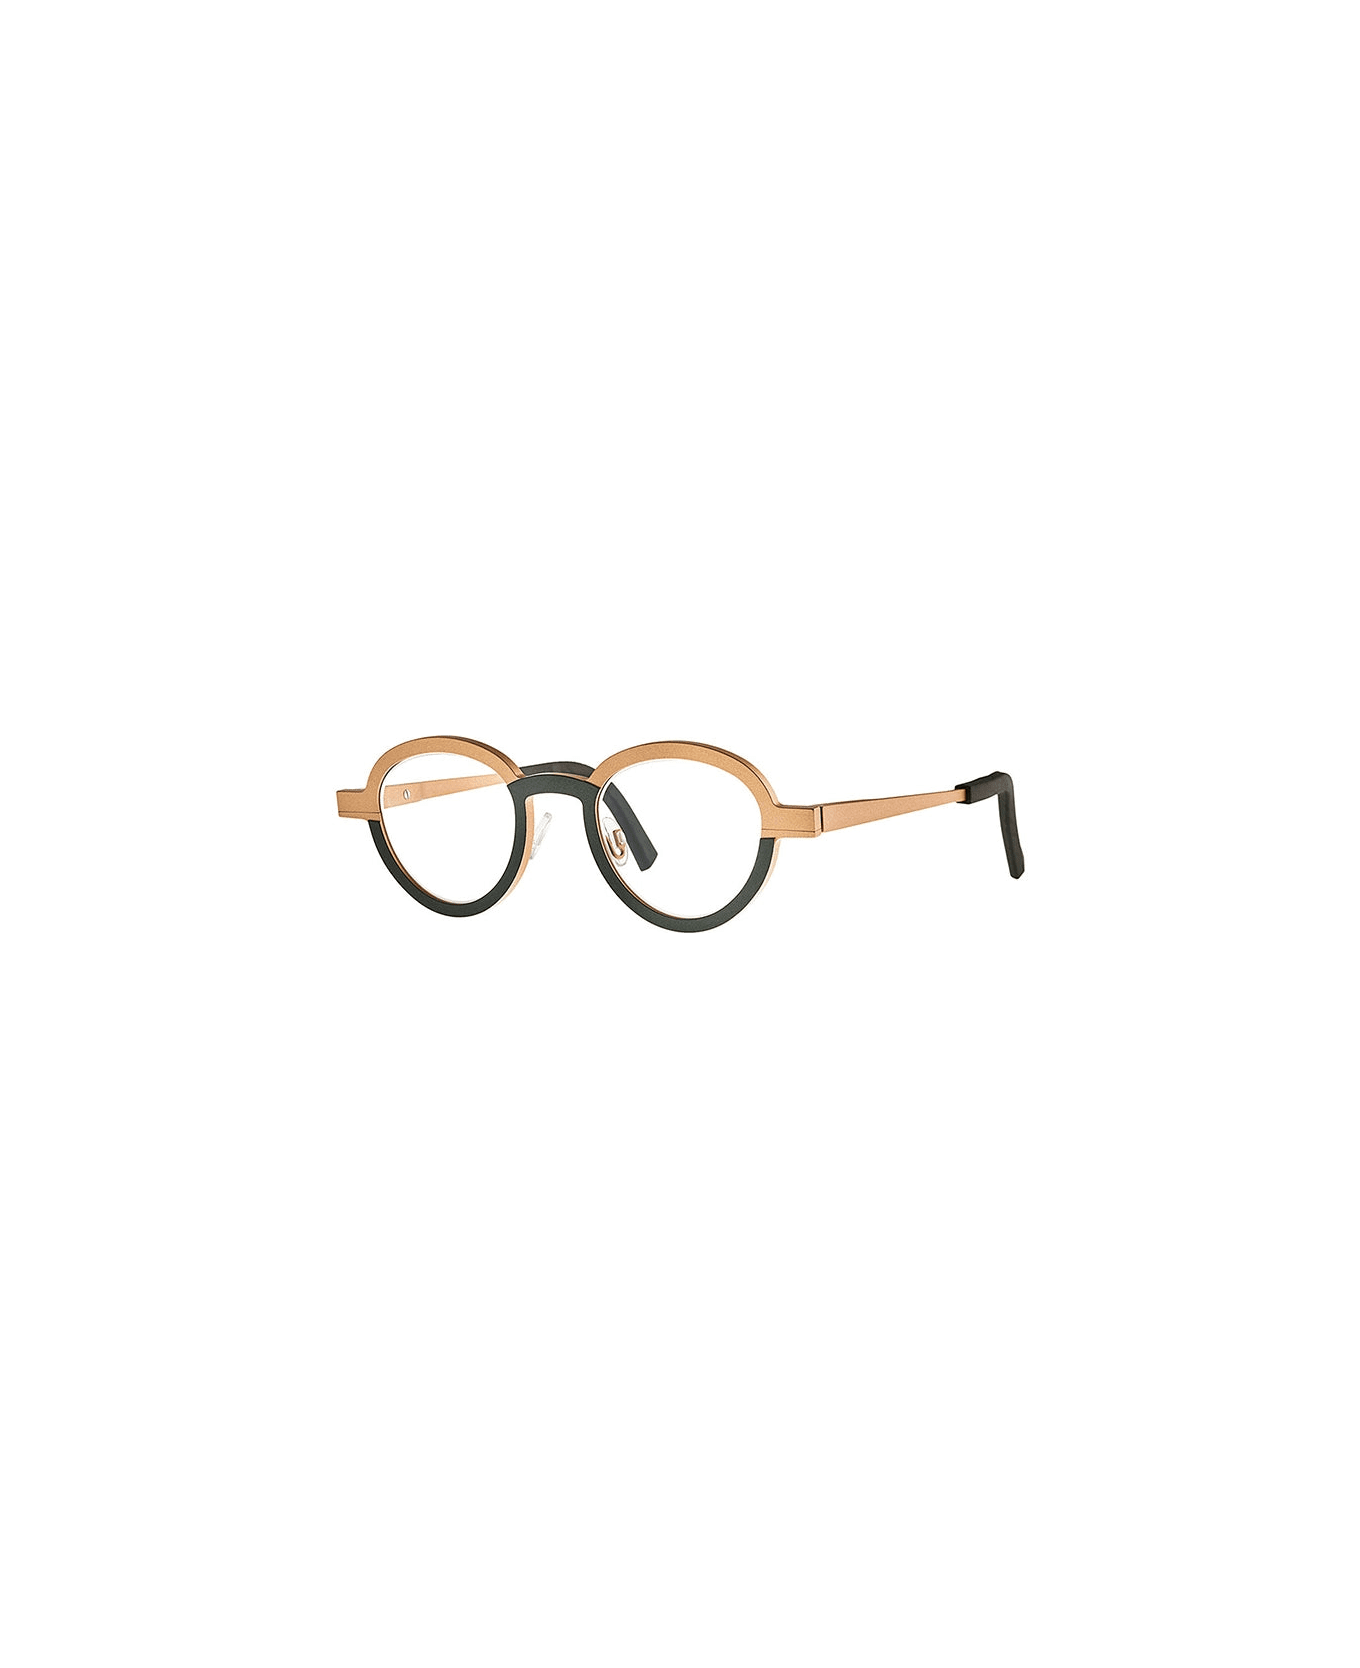 Theo Eyewear Collins - 463 Glasses - black/bronze アイウェア